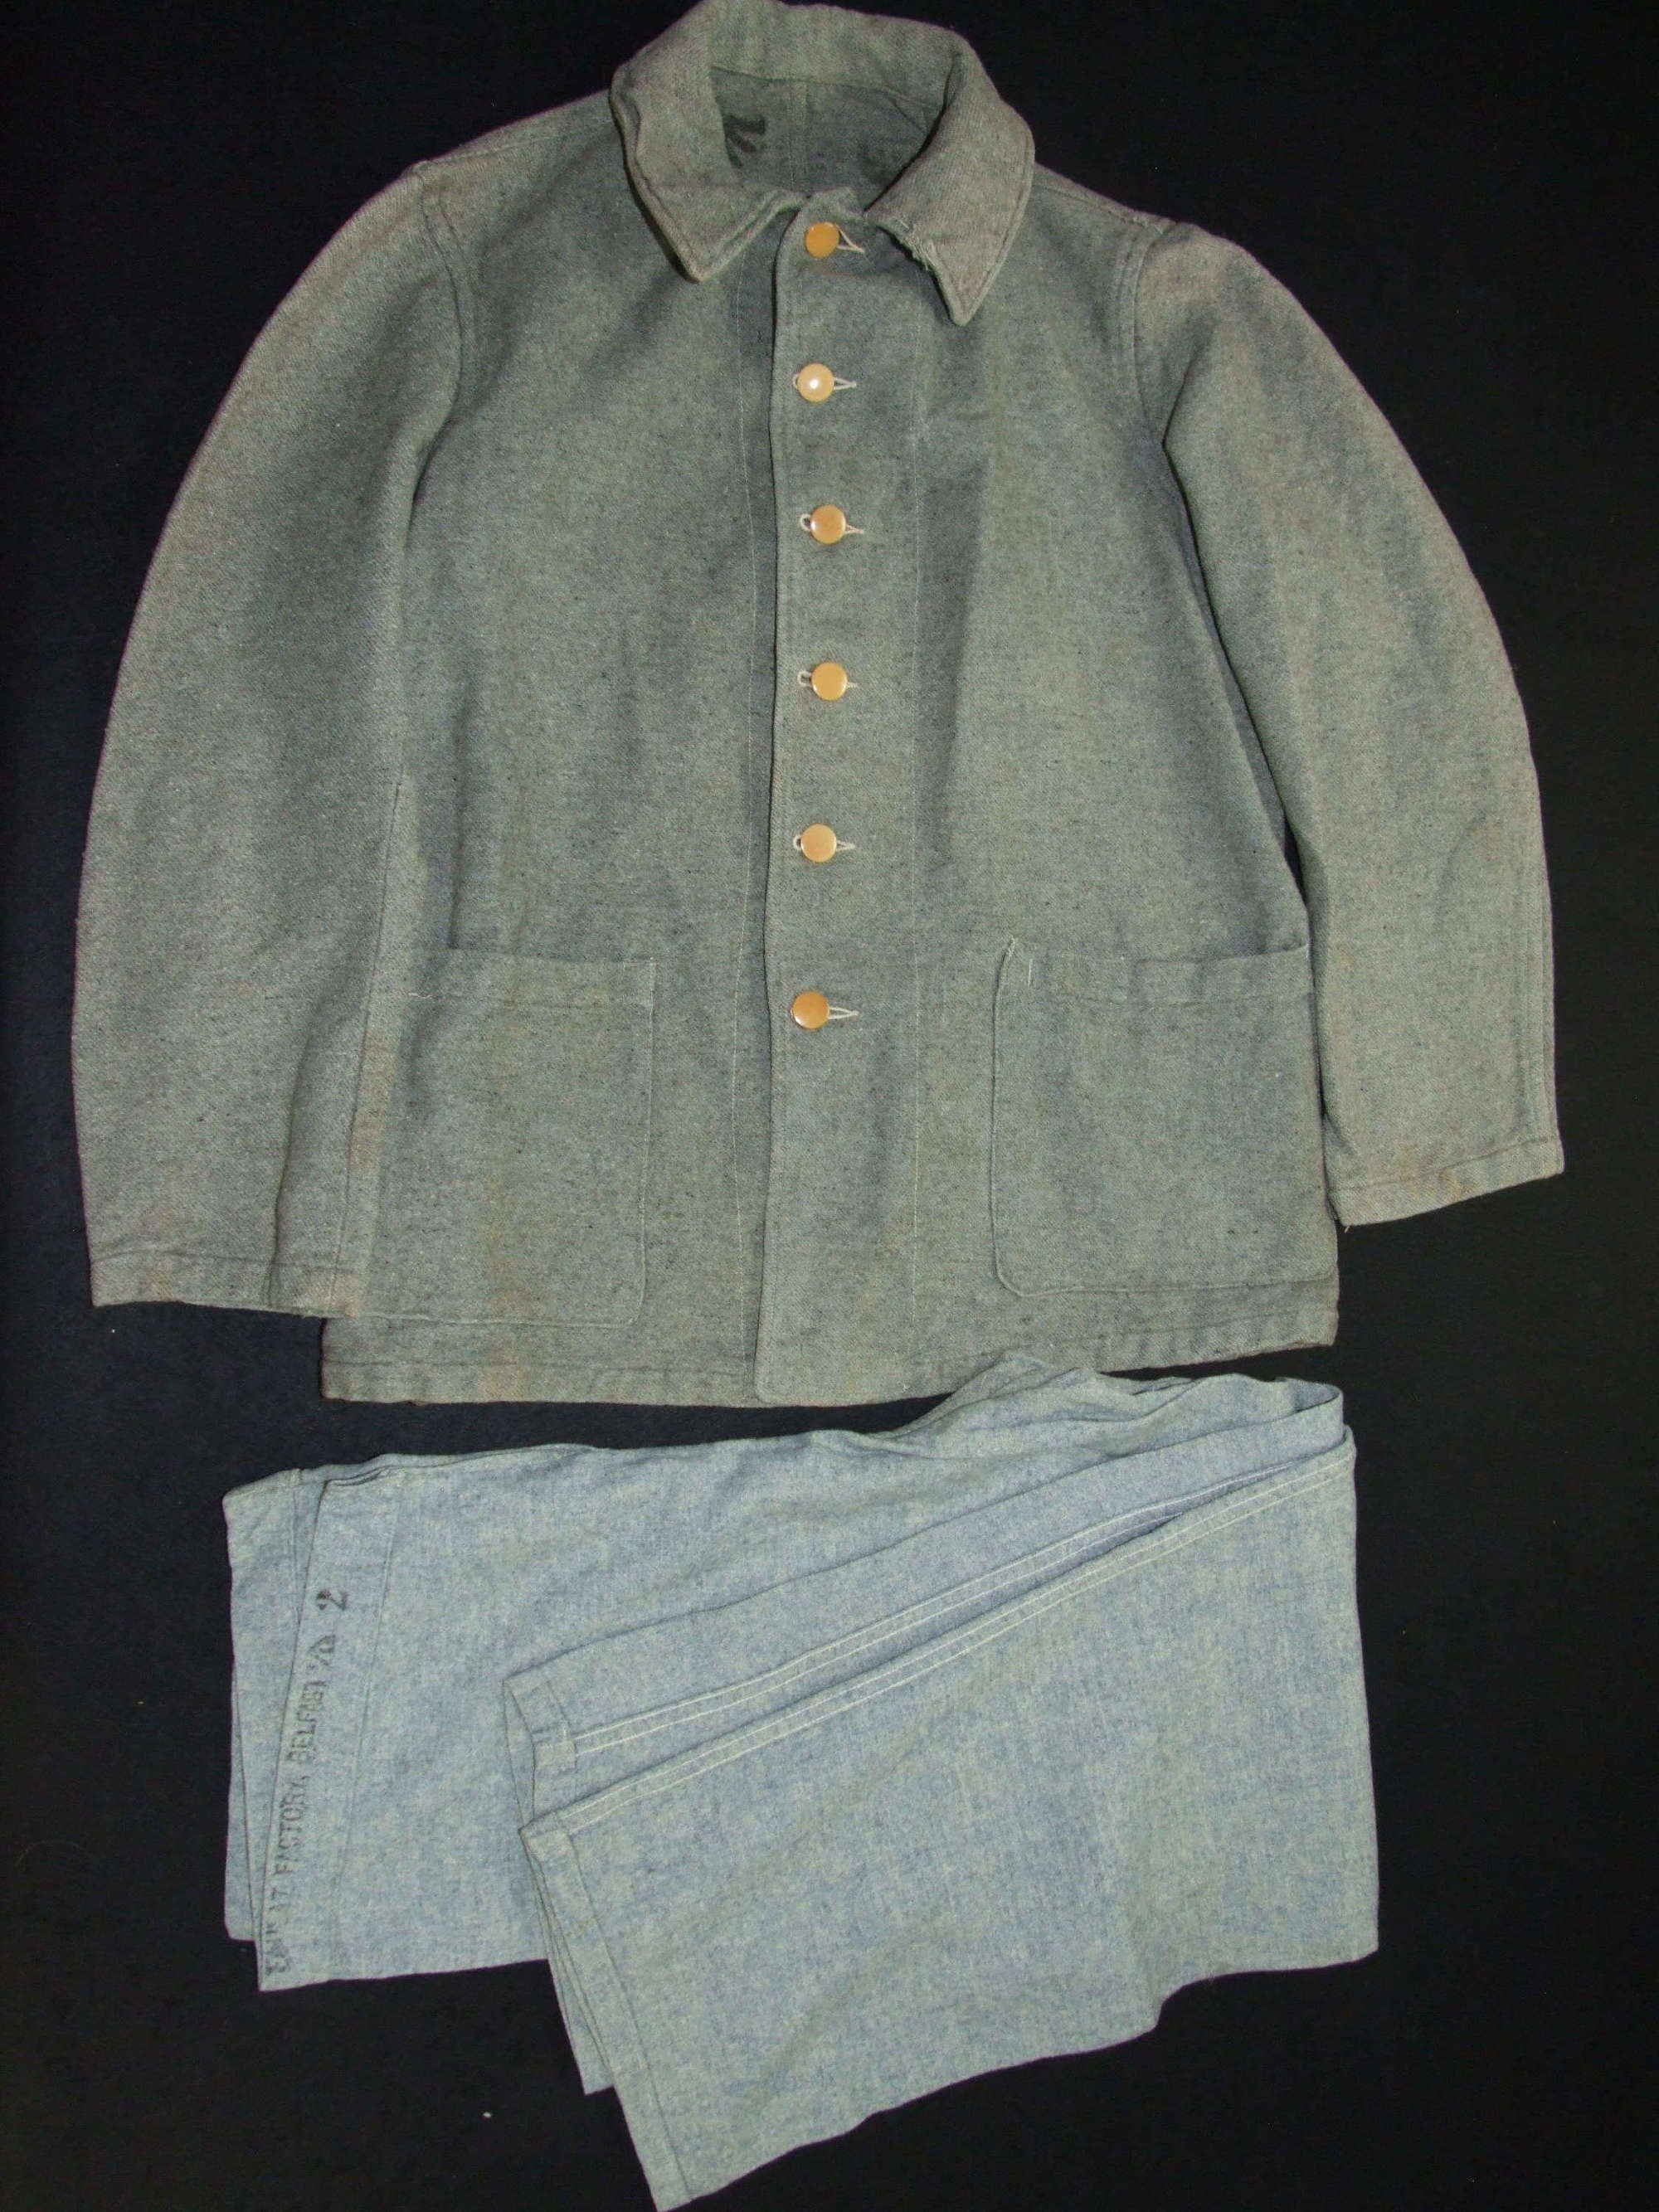 WW1 German POW Uniform Used in US Camps